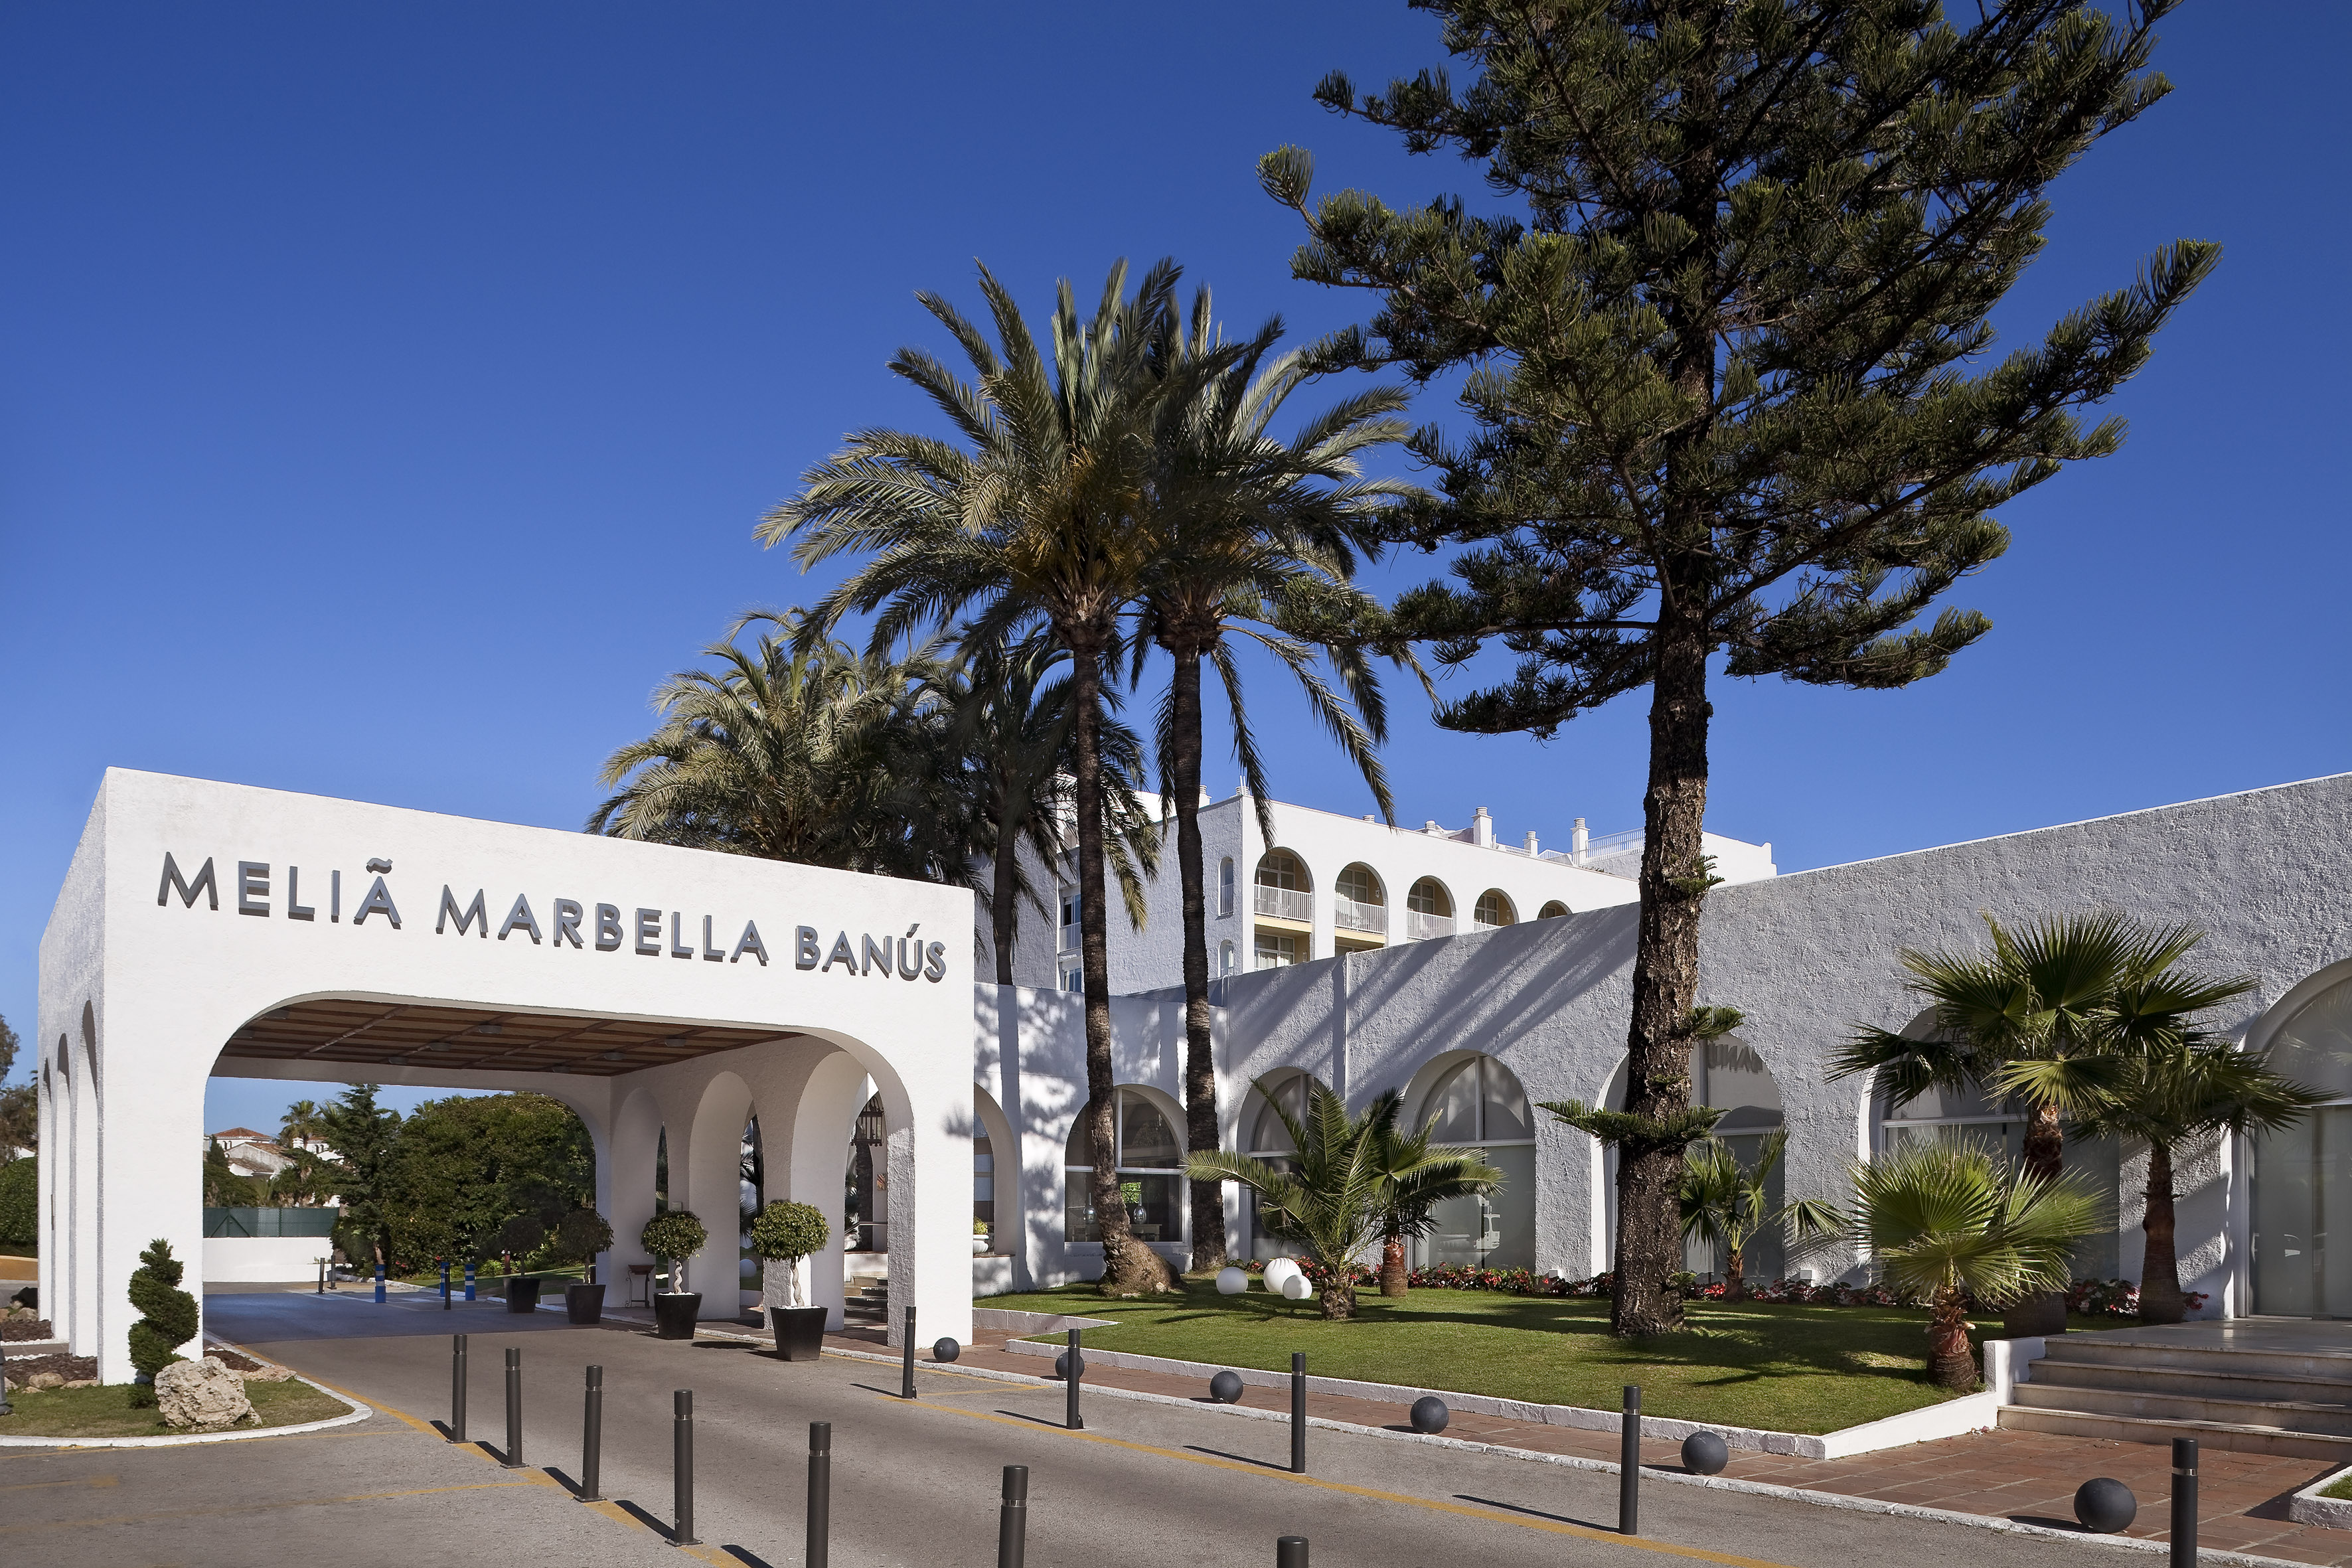 Golf-Expedition-Golf-reizen-Spanje-Regio-Malaga-Melia-Marbella-banus-entrance